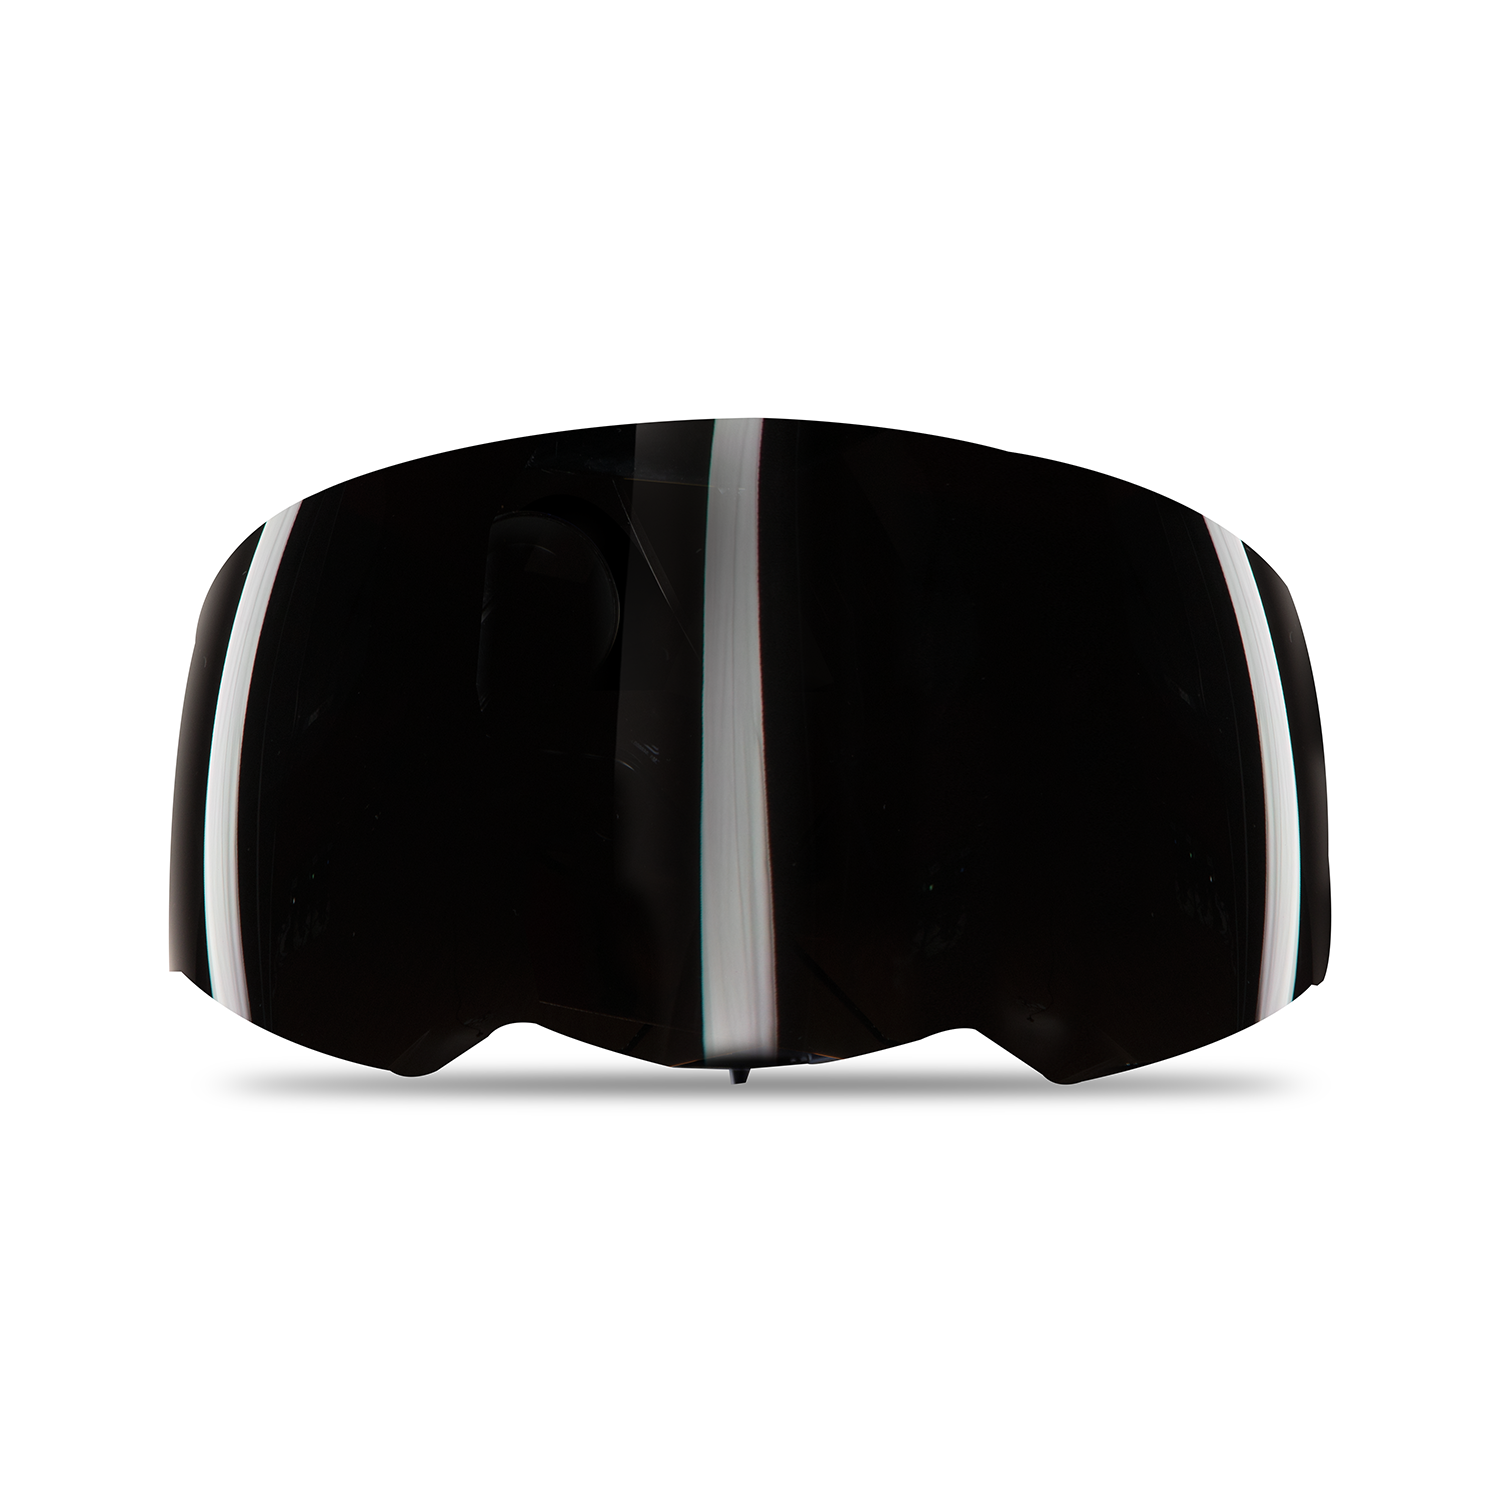 Steelbird Helmet Visor Compatible For All SBA-1 Model Helmets